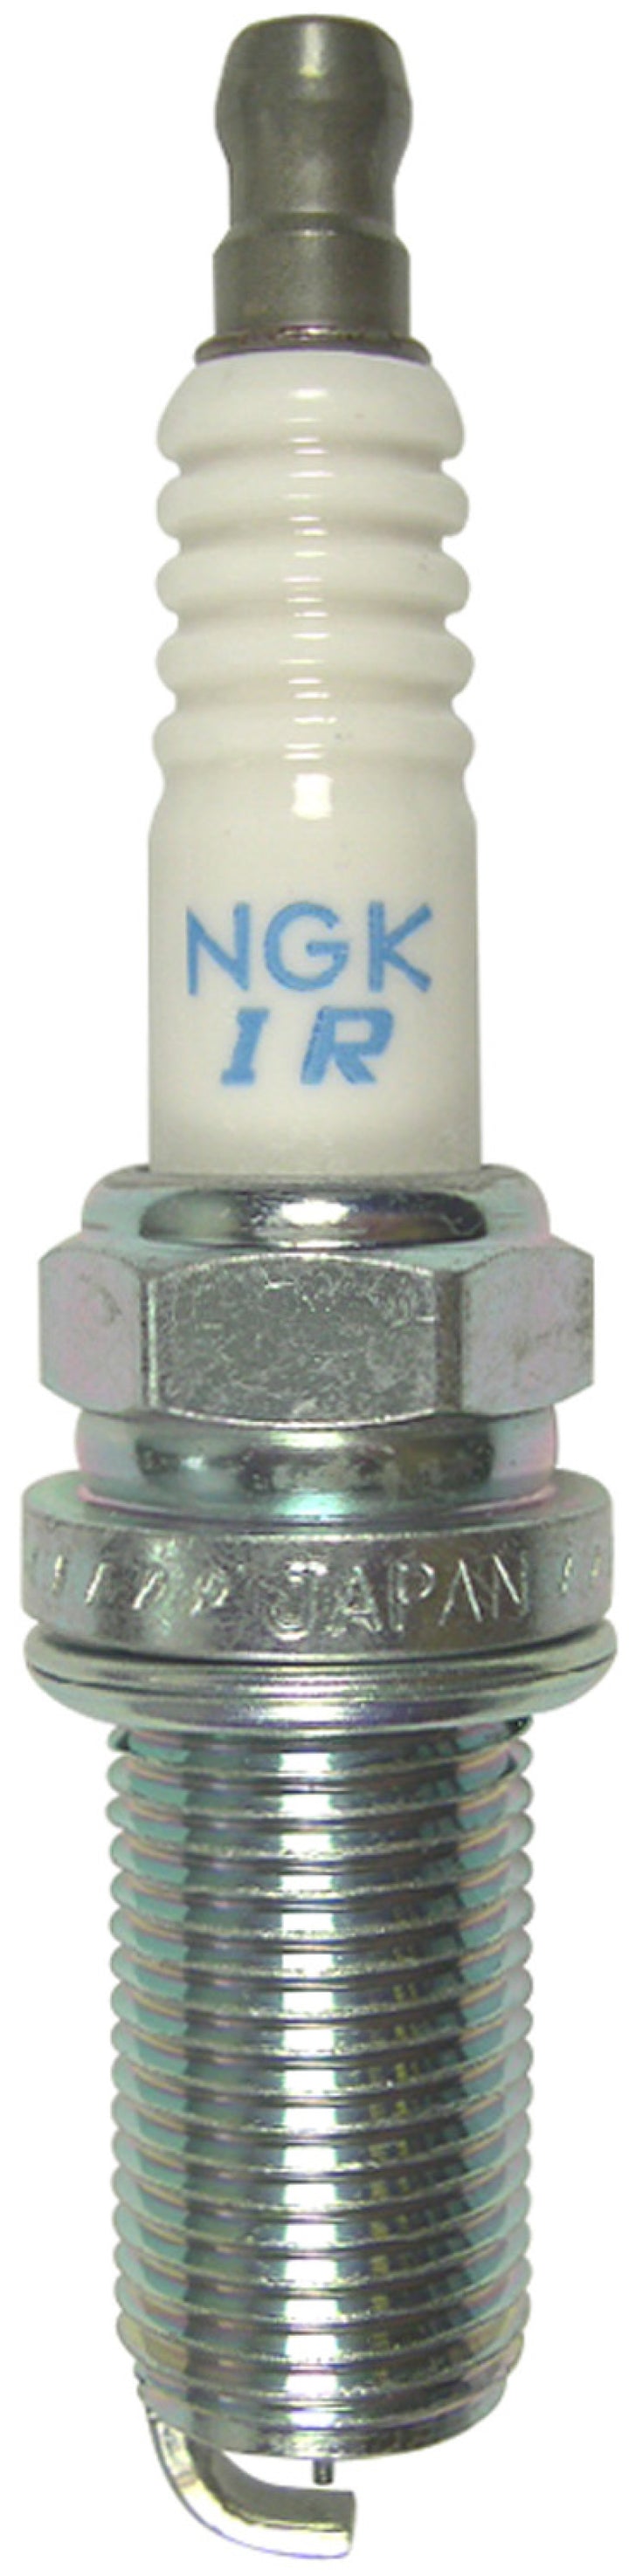 NGK Laser Iridium Long Life Stock Heat Spark Plug (Box of 4).